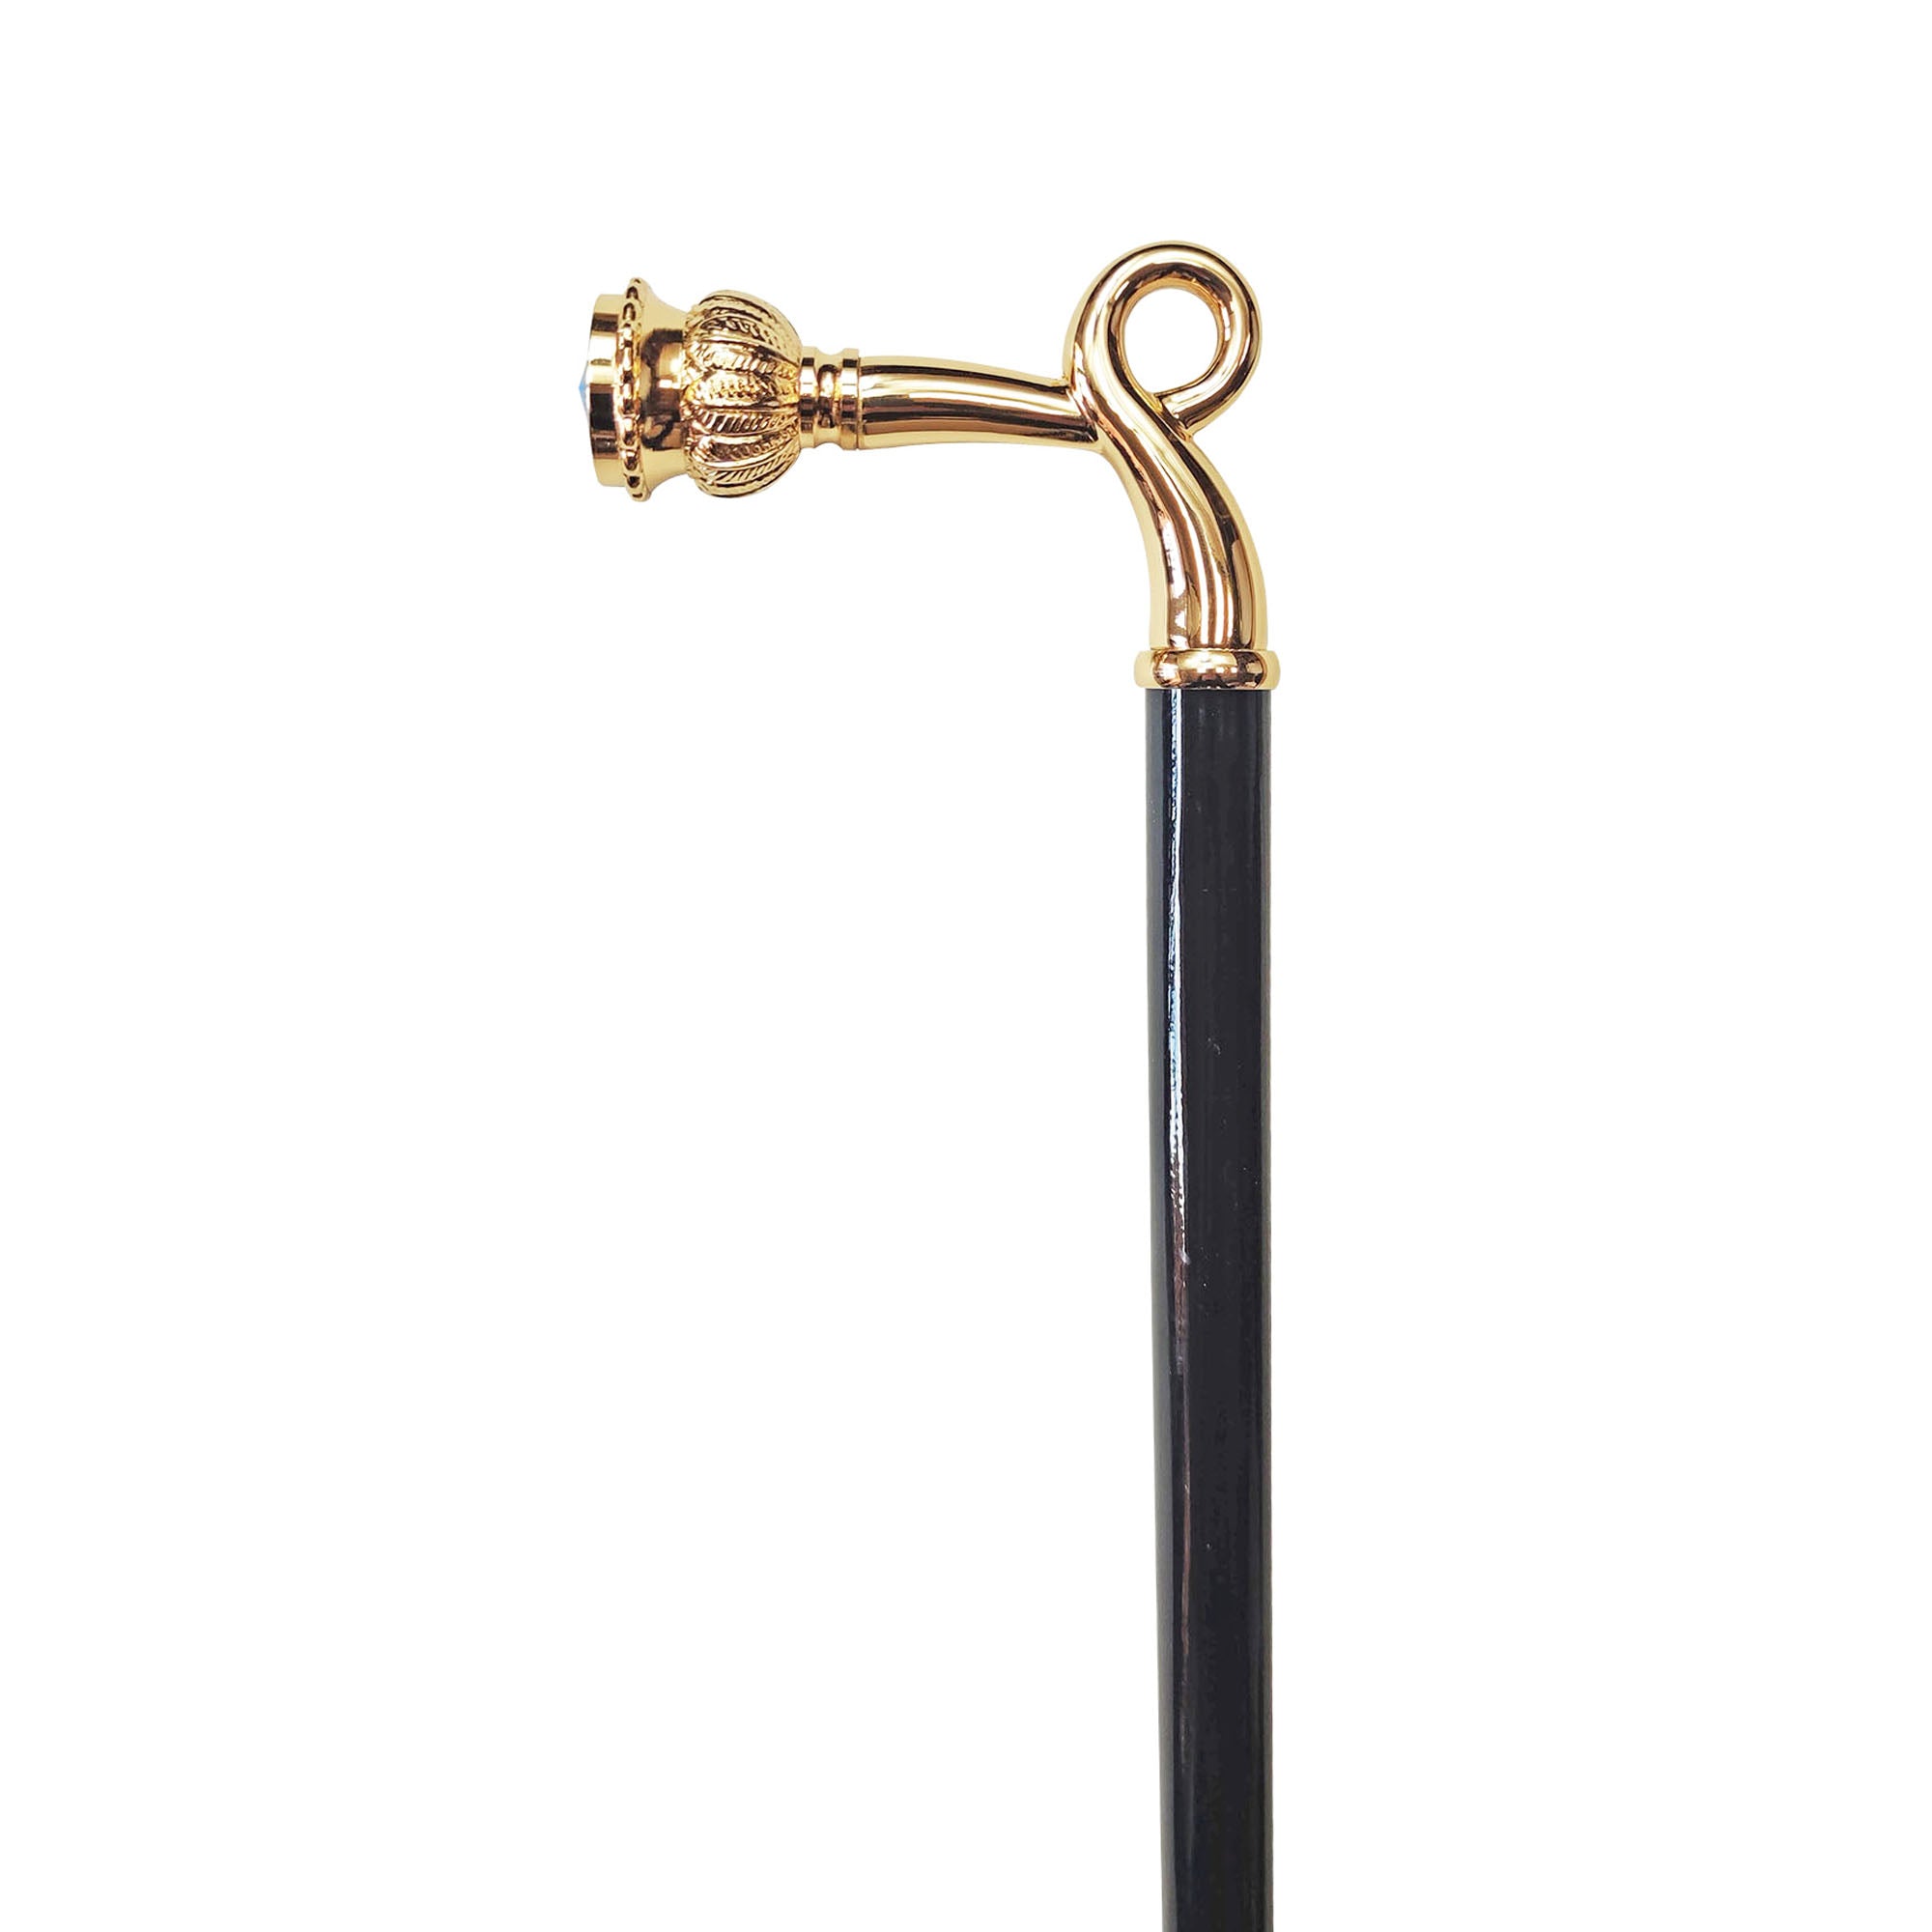 Walking stick - Sturdy gold plated 24K brass handle